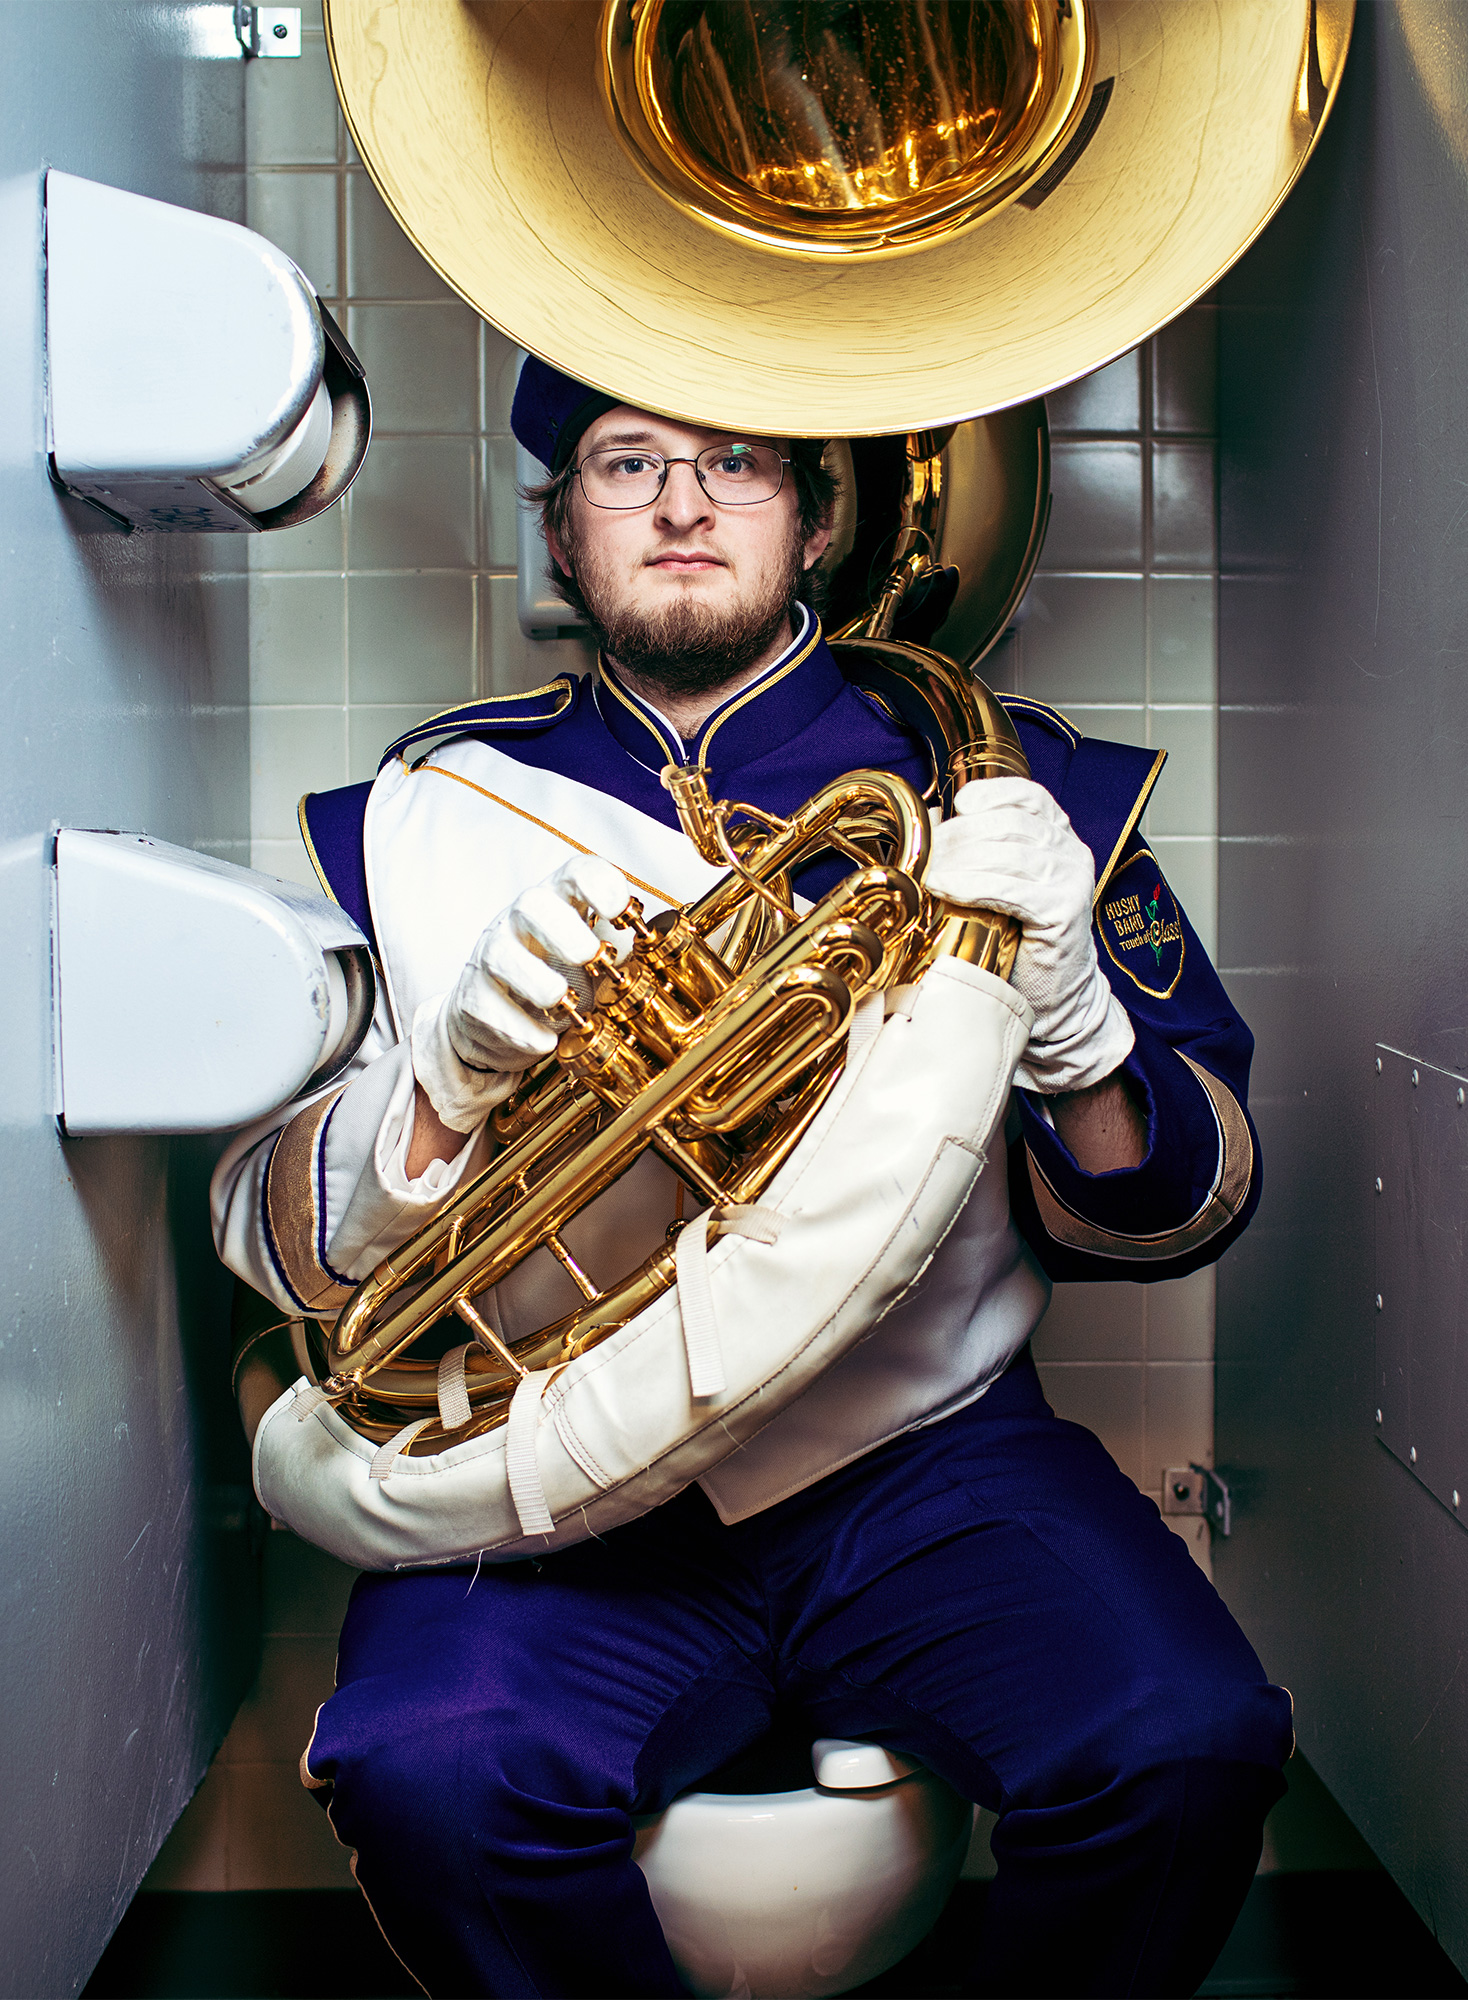 Jeff Waley, sousaphone leader in the University of Washington marching band